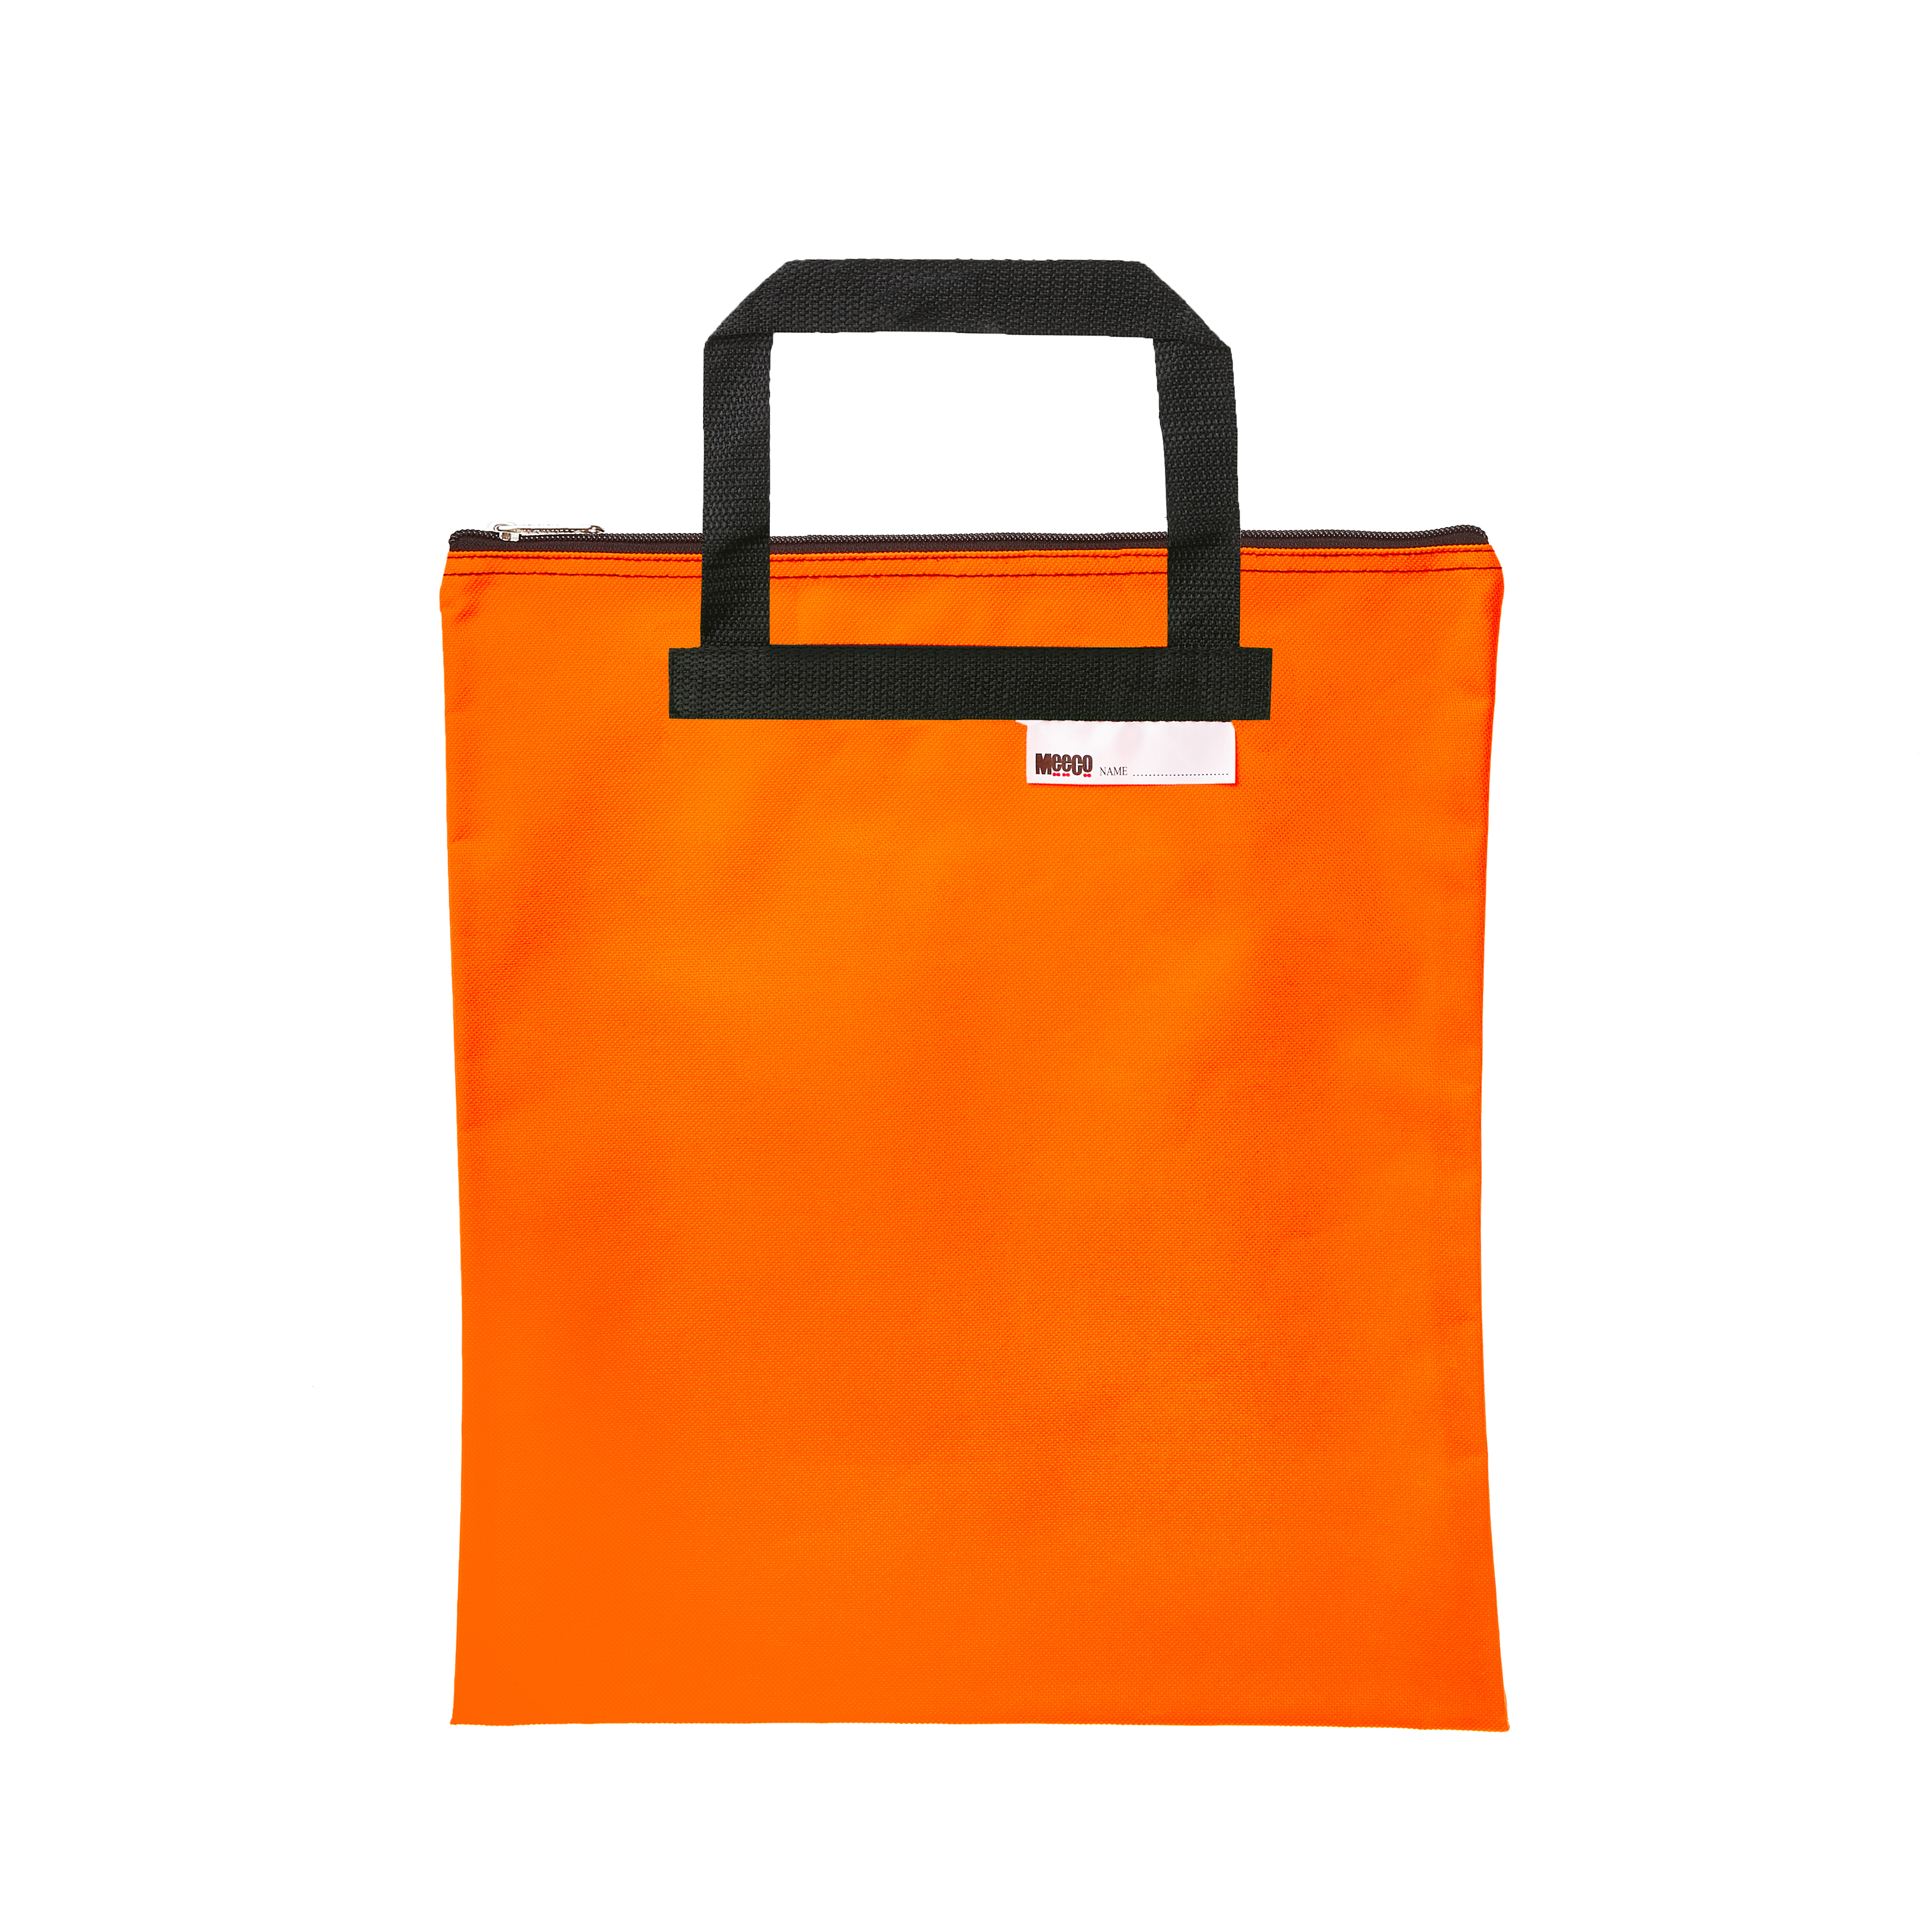 Meeco Carry Bag with Zip Closure - Orange